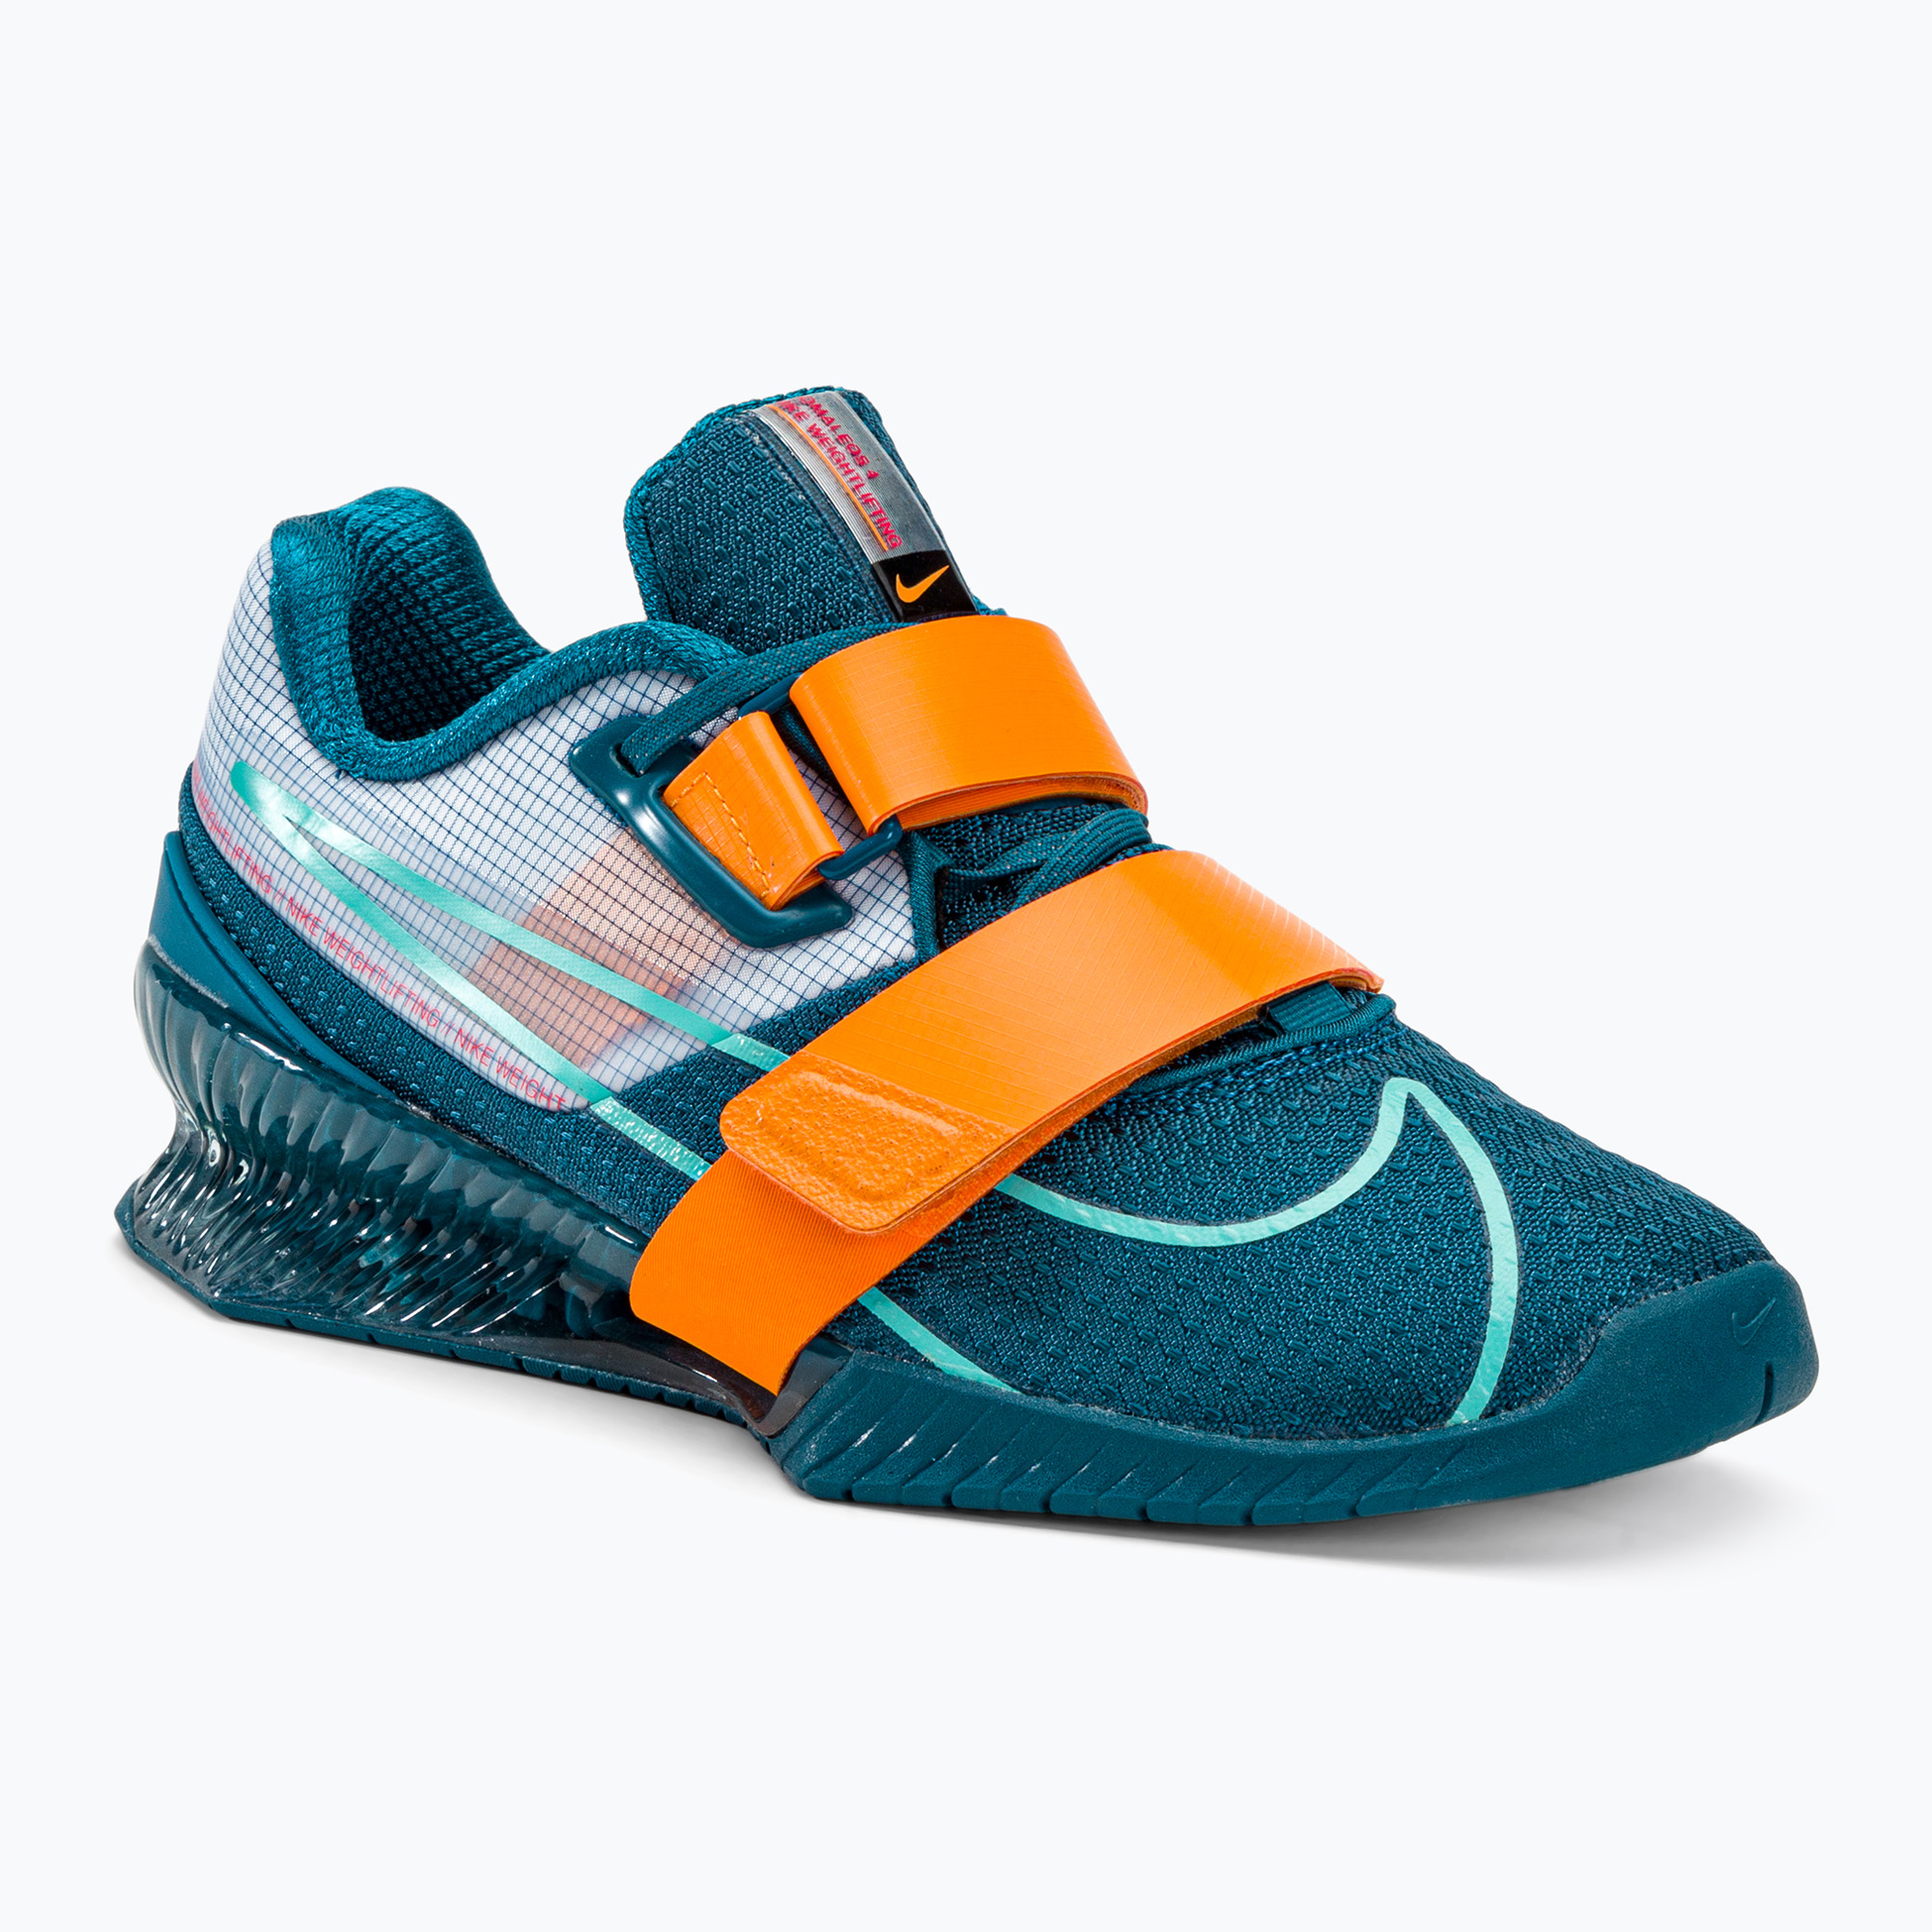 Nike Romaleos 4 albastru / portocaliu haltere pantofi de haltere